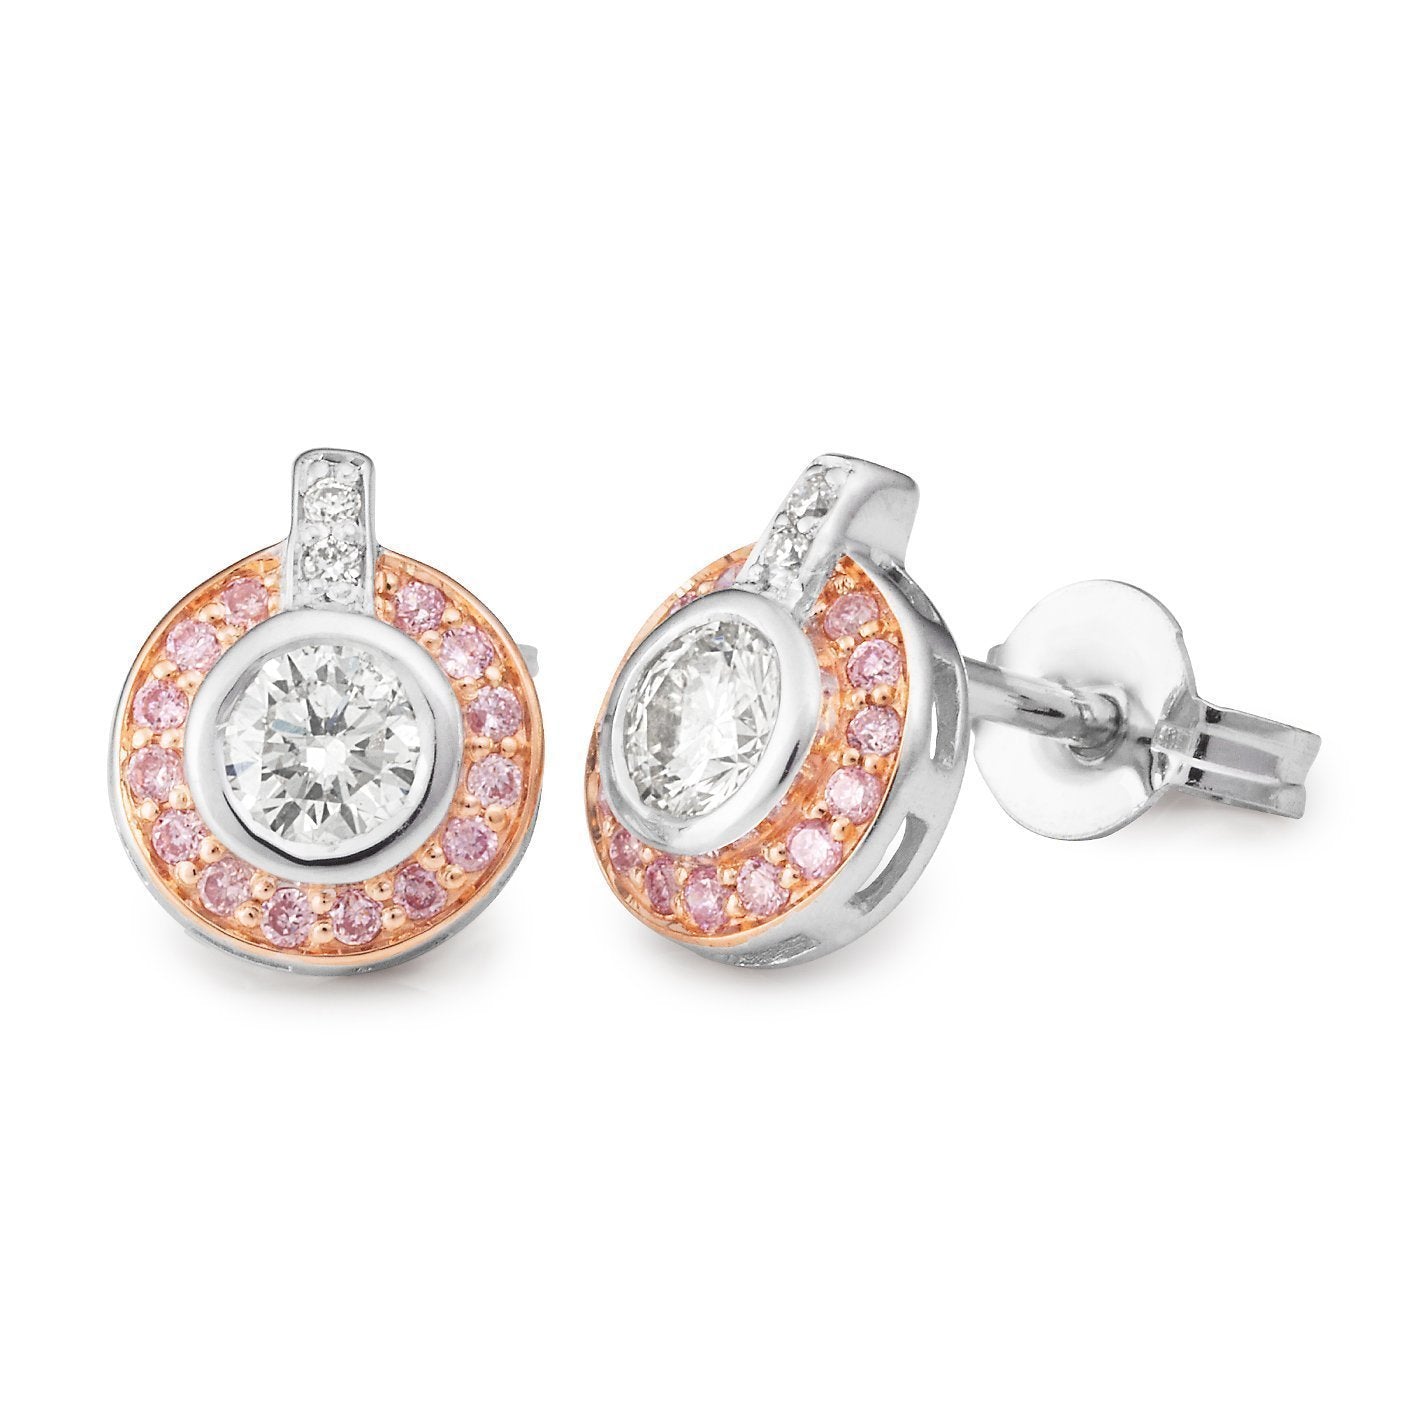 PINK CAVIAR 0.46ct Pink Diamond Earrings in 9ct Rose Gold